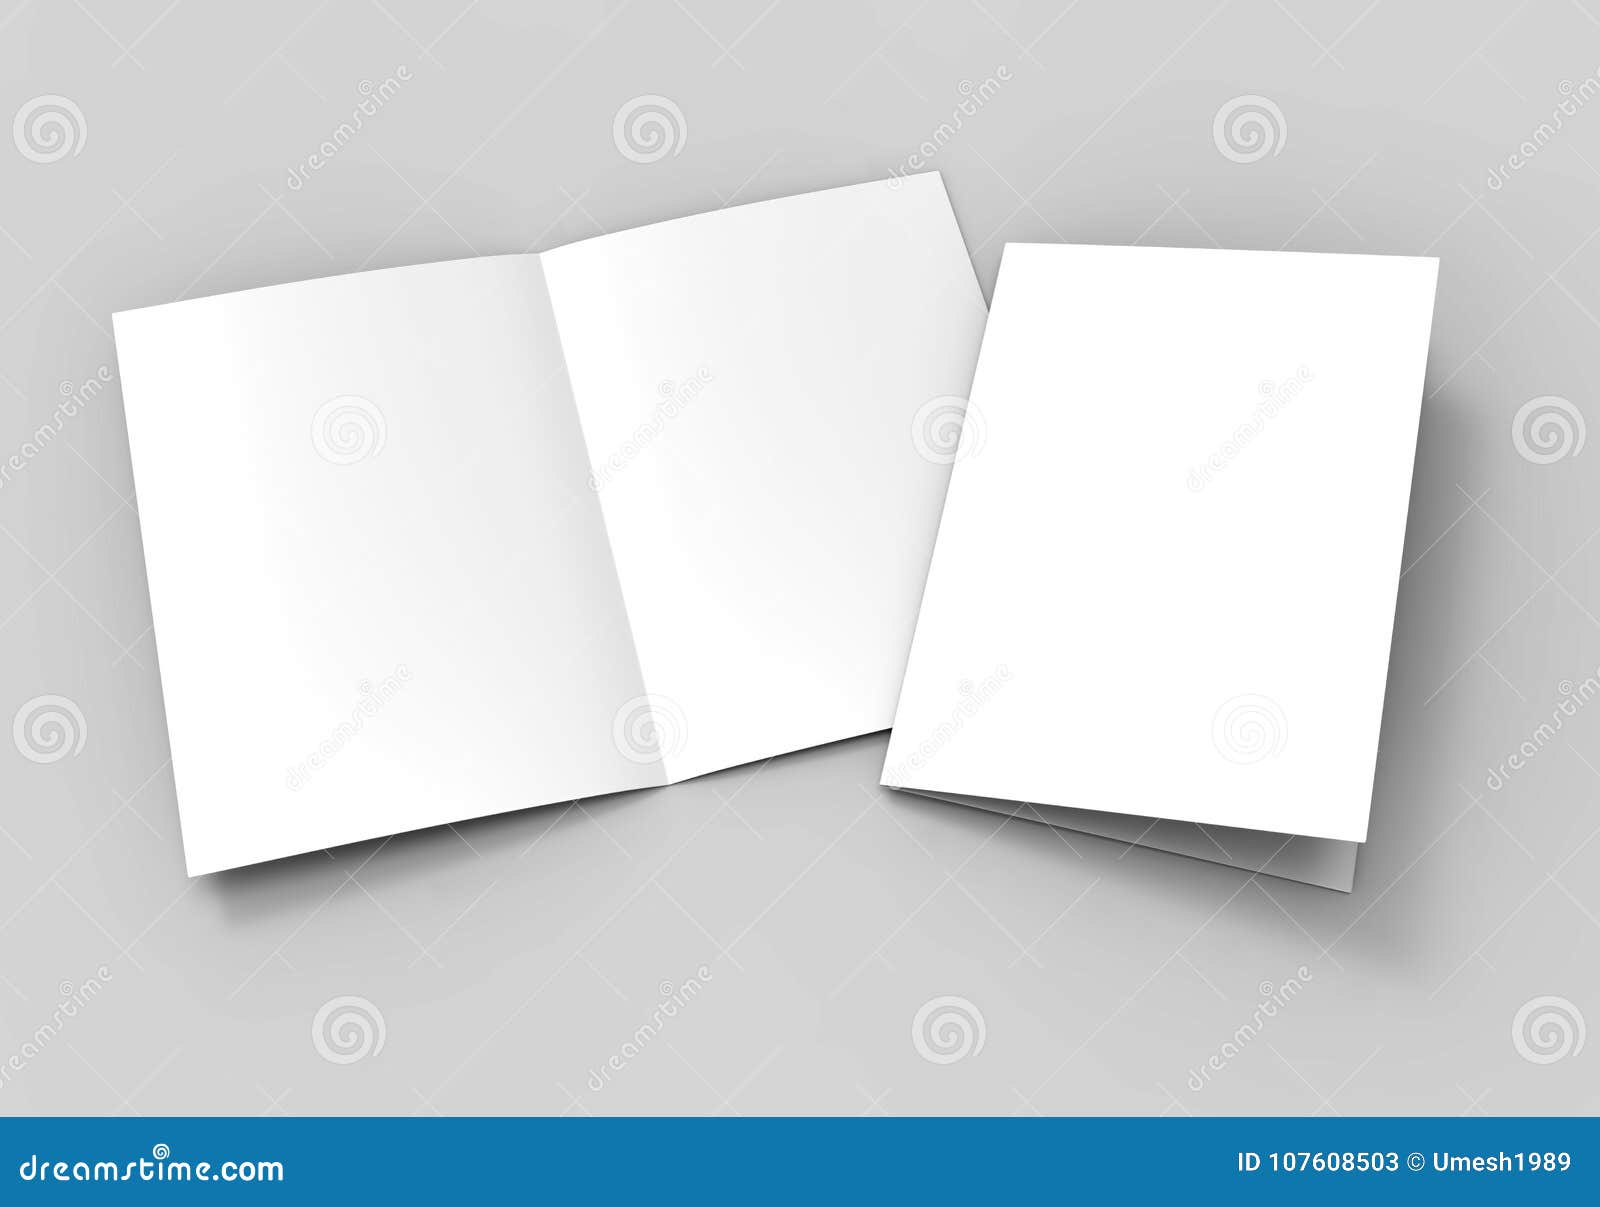 A3 Half Fold Brochure Blank White Template For Mock Up And Presentation Design 3d Illustration Stock Illustration Illustration Of Elegant Clean 107608503